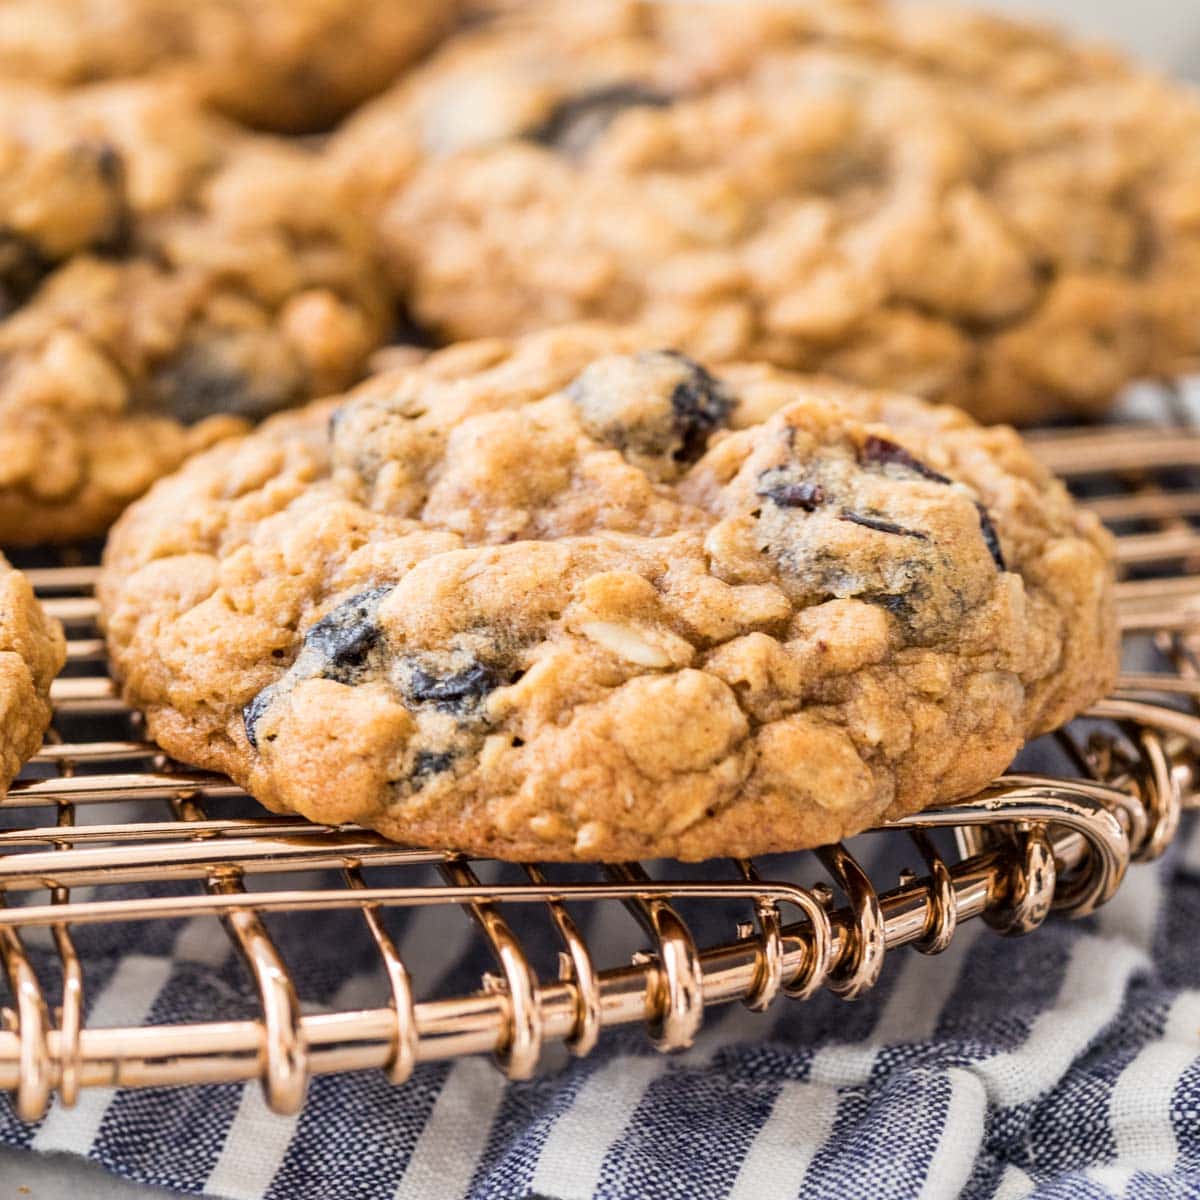 https://sugarspunrun.com/wp-content/uploads/2022/04/Oatmeal-Raisin-Cookies-1-of-1.jpg